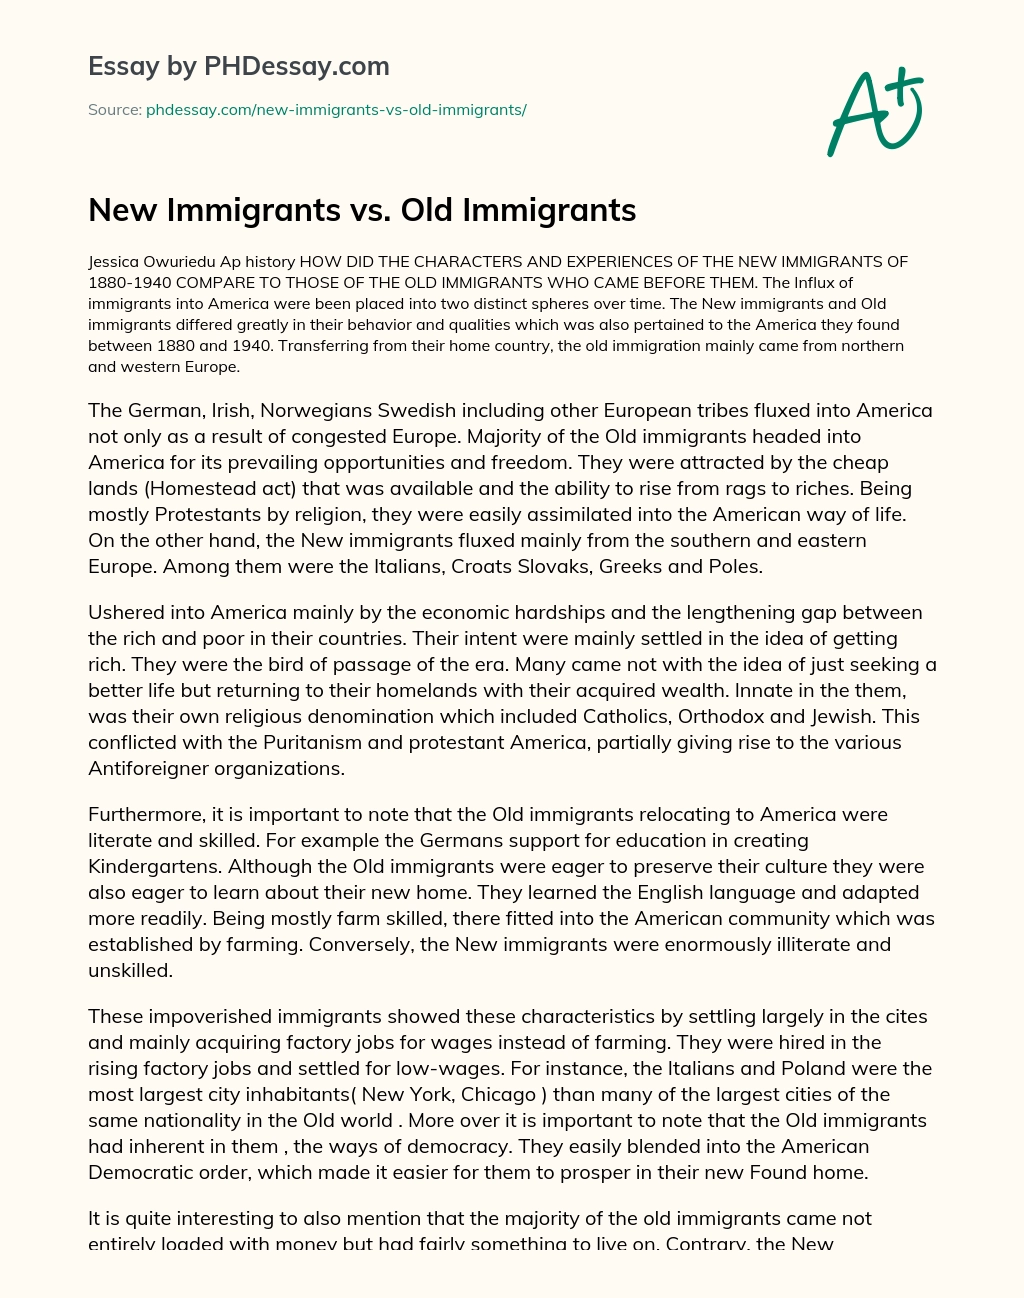 New Immigrants vs. Old Immigrants essay